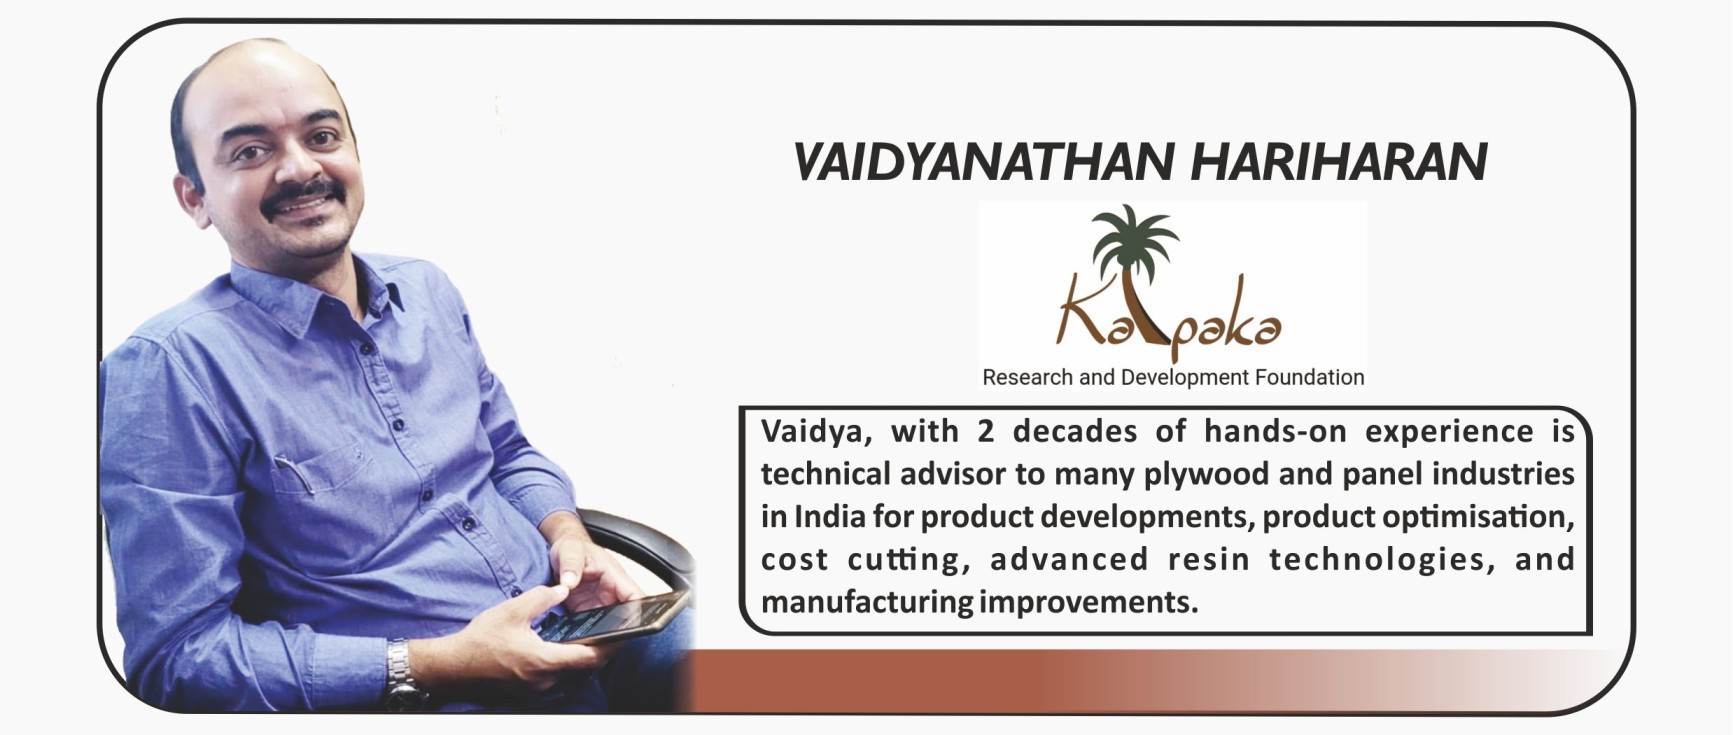 Vaidyanathan Hariharan - Kalpaka Research and Development Foundation